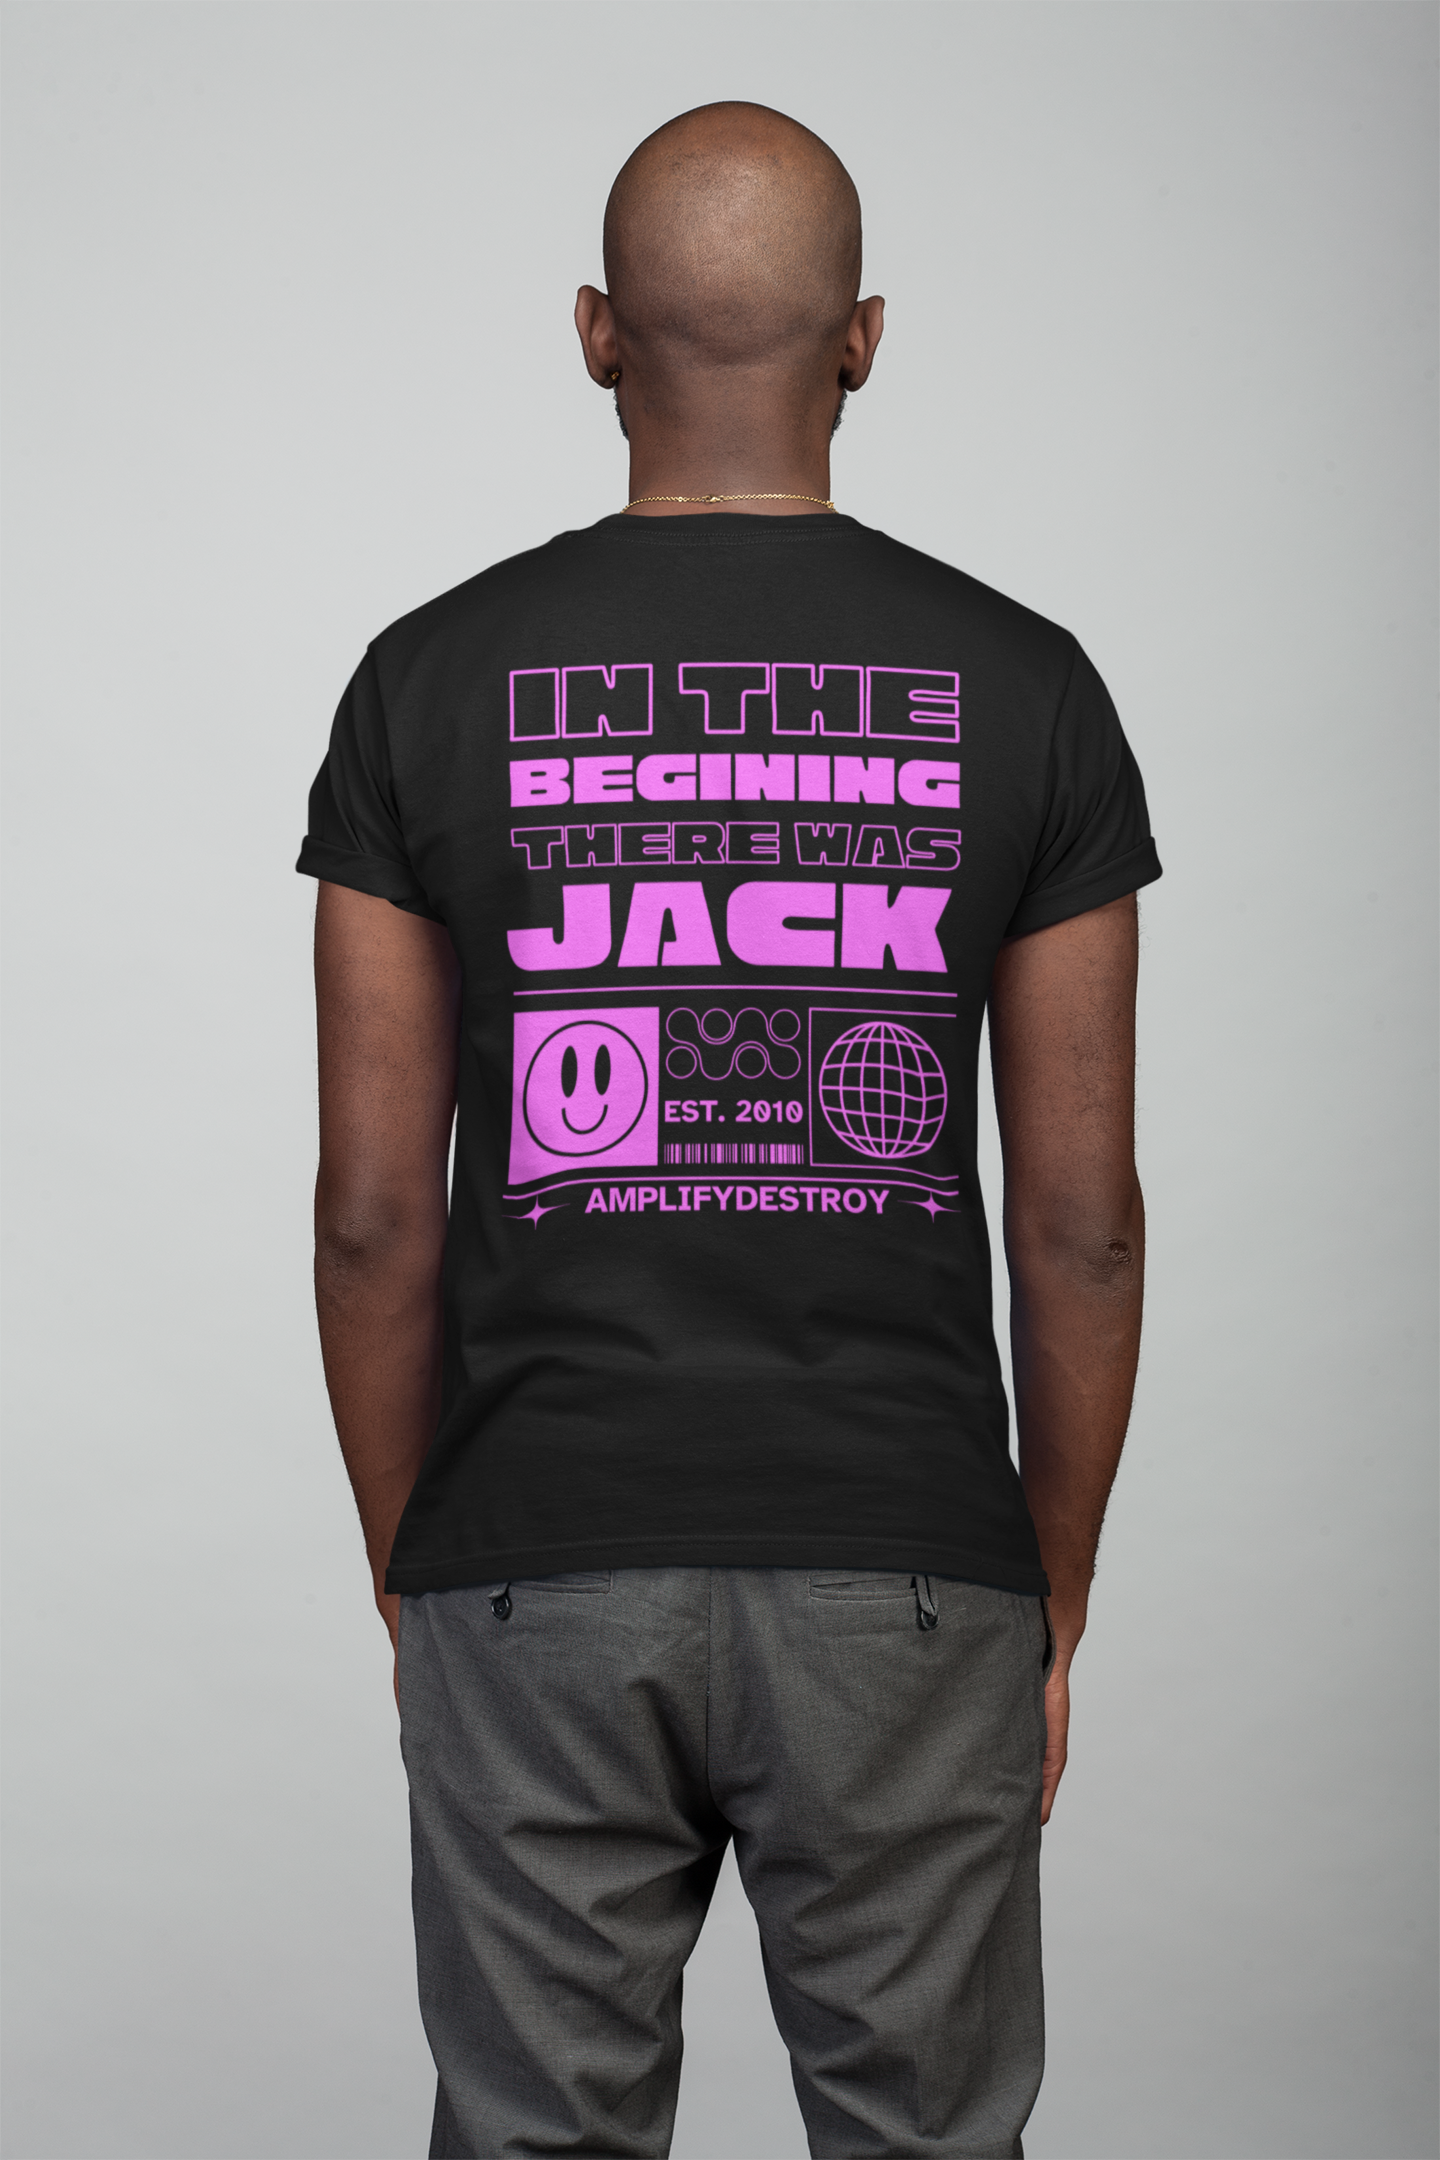 JACK UR BODY Classic Fit AmplifyDestroy Print Tee Shirt Rave House Music 90s Dj Club Flyer